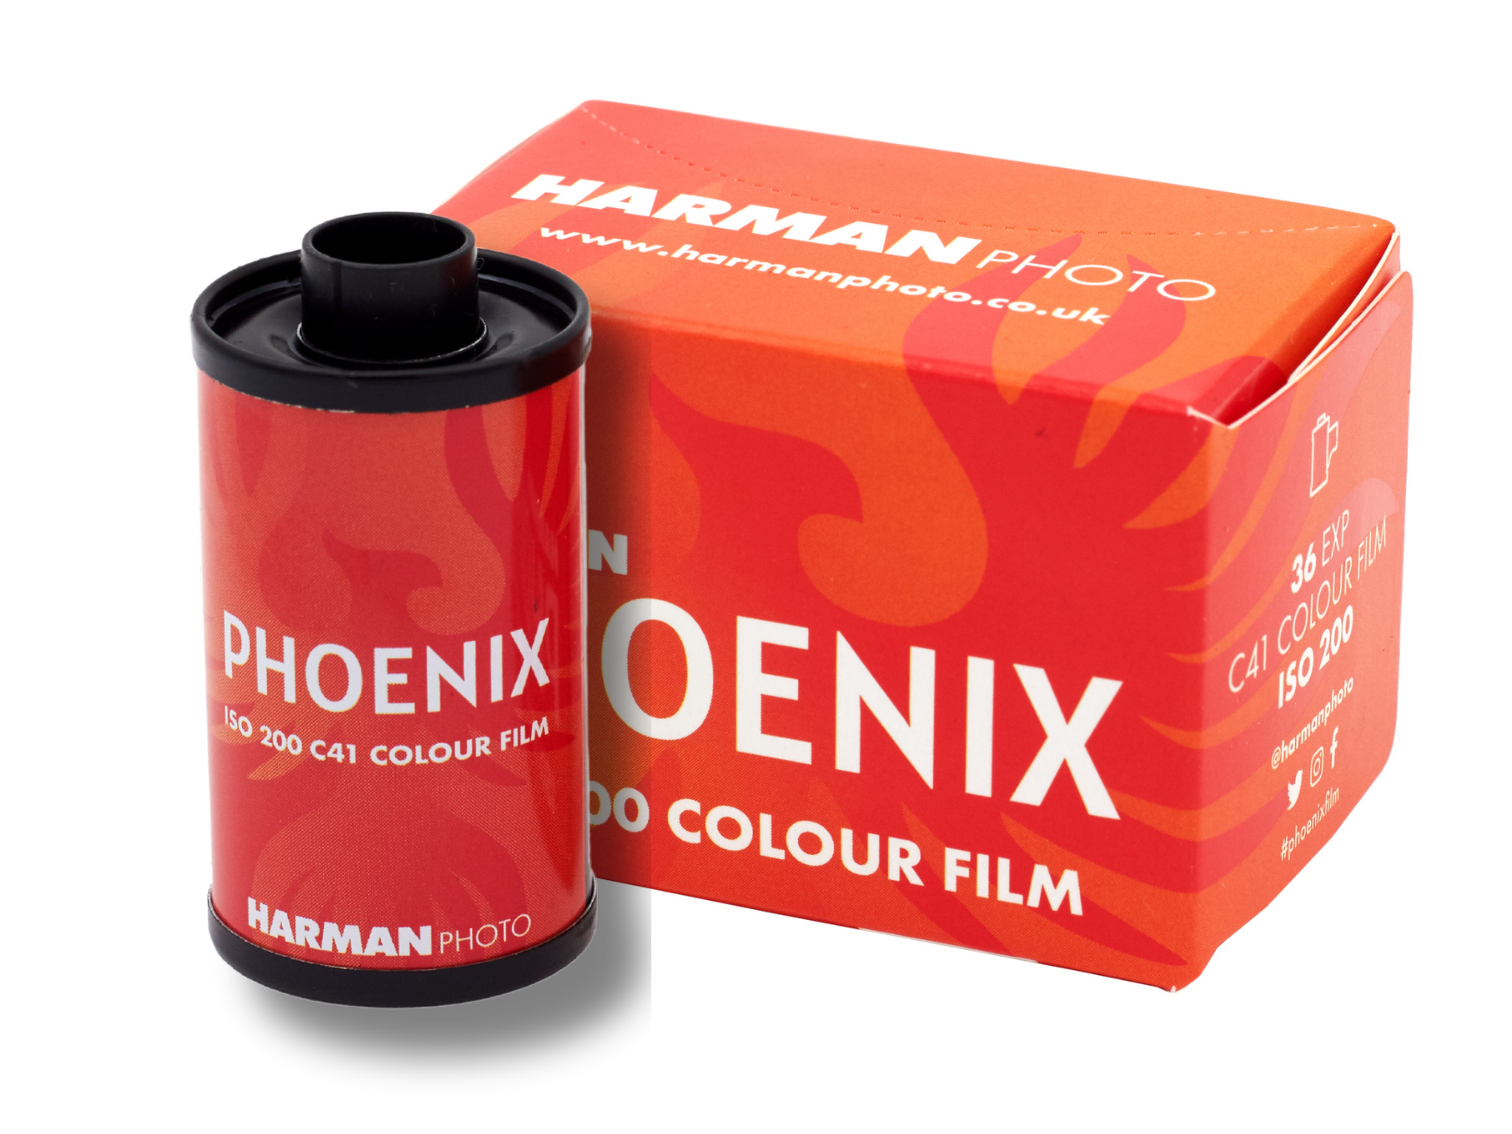 Harman Phoenix - 35mm Film - Product Shot